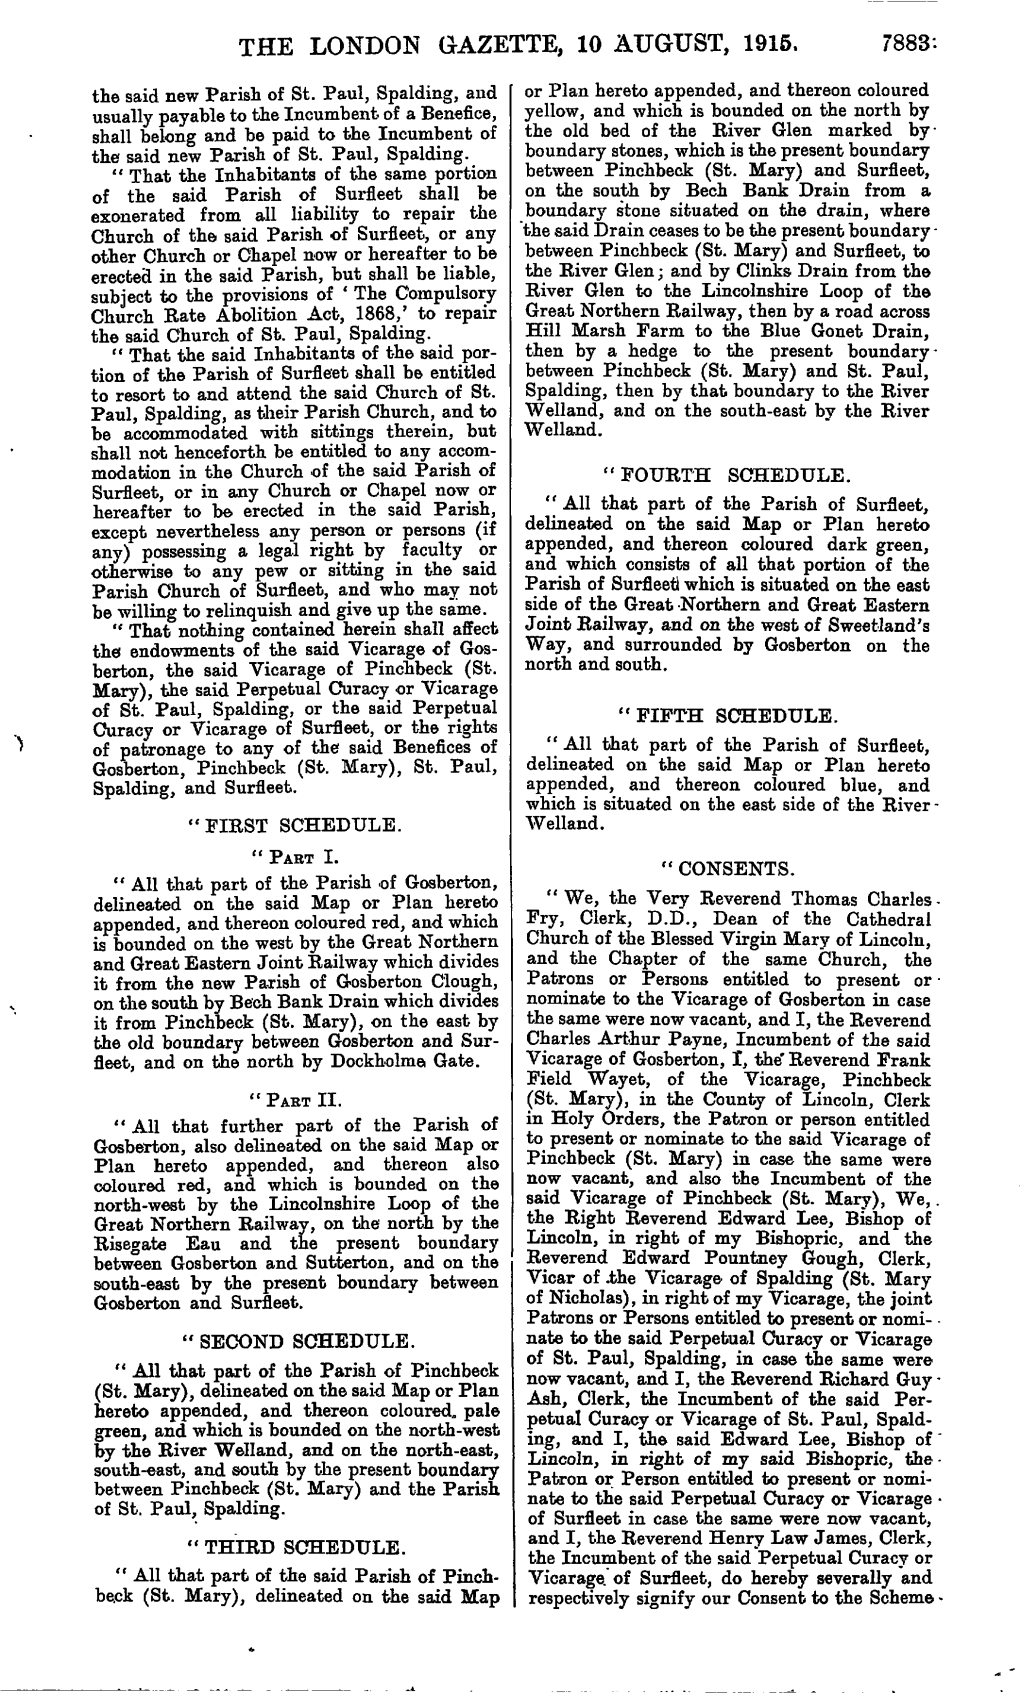 The London Gazette, 10 August, 1915. 7883'